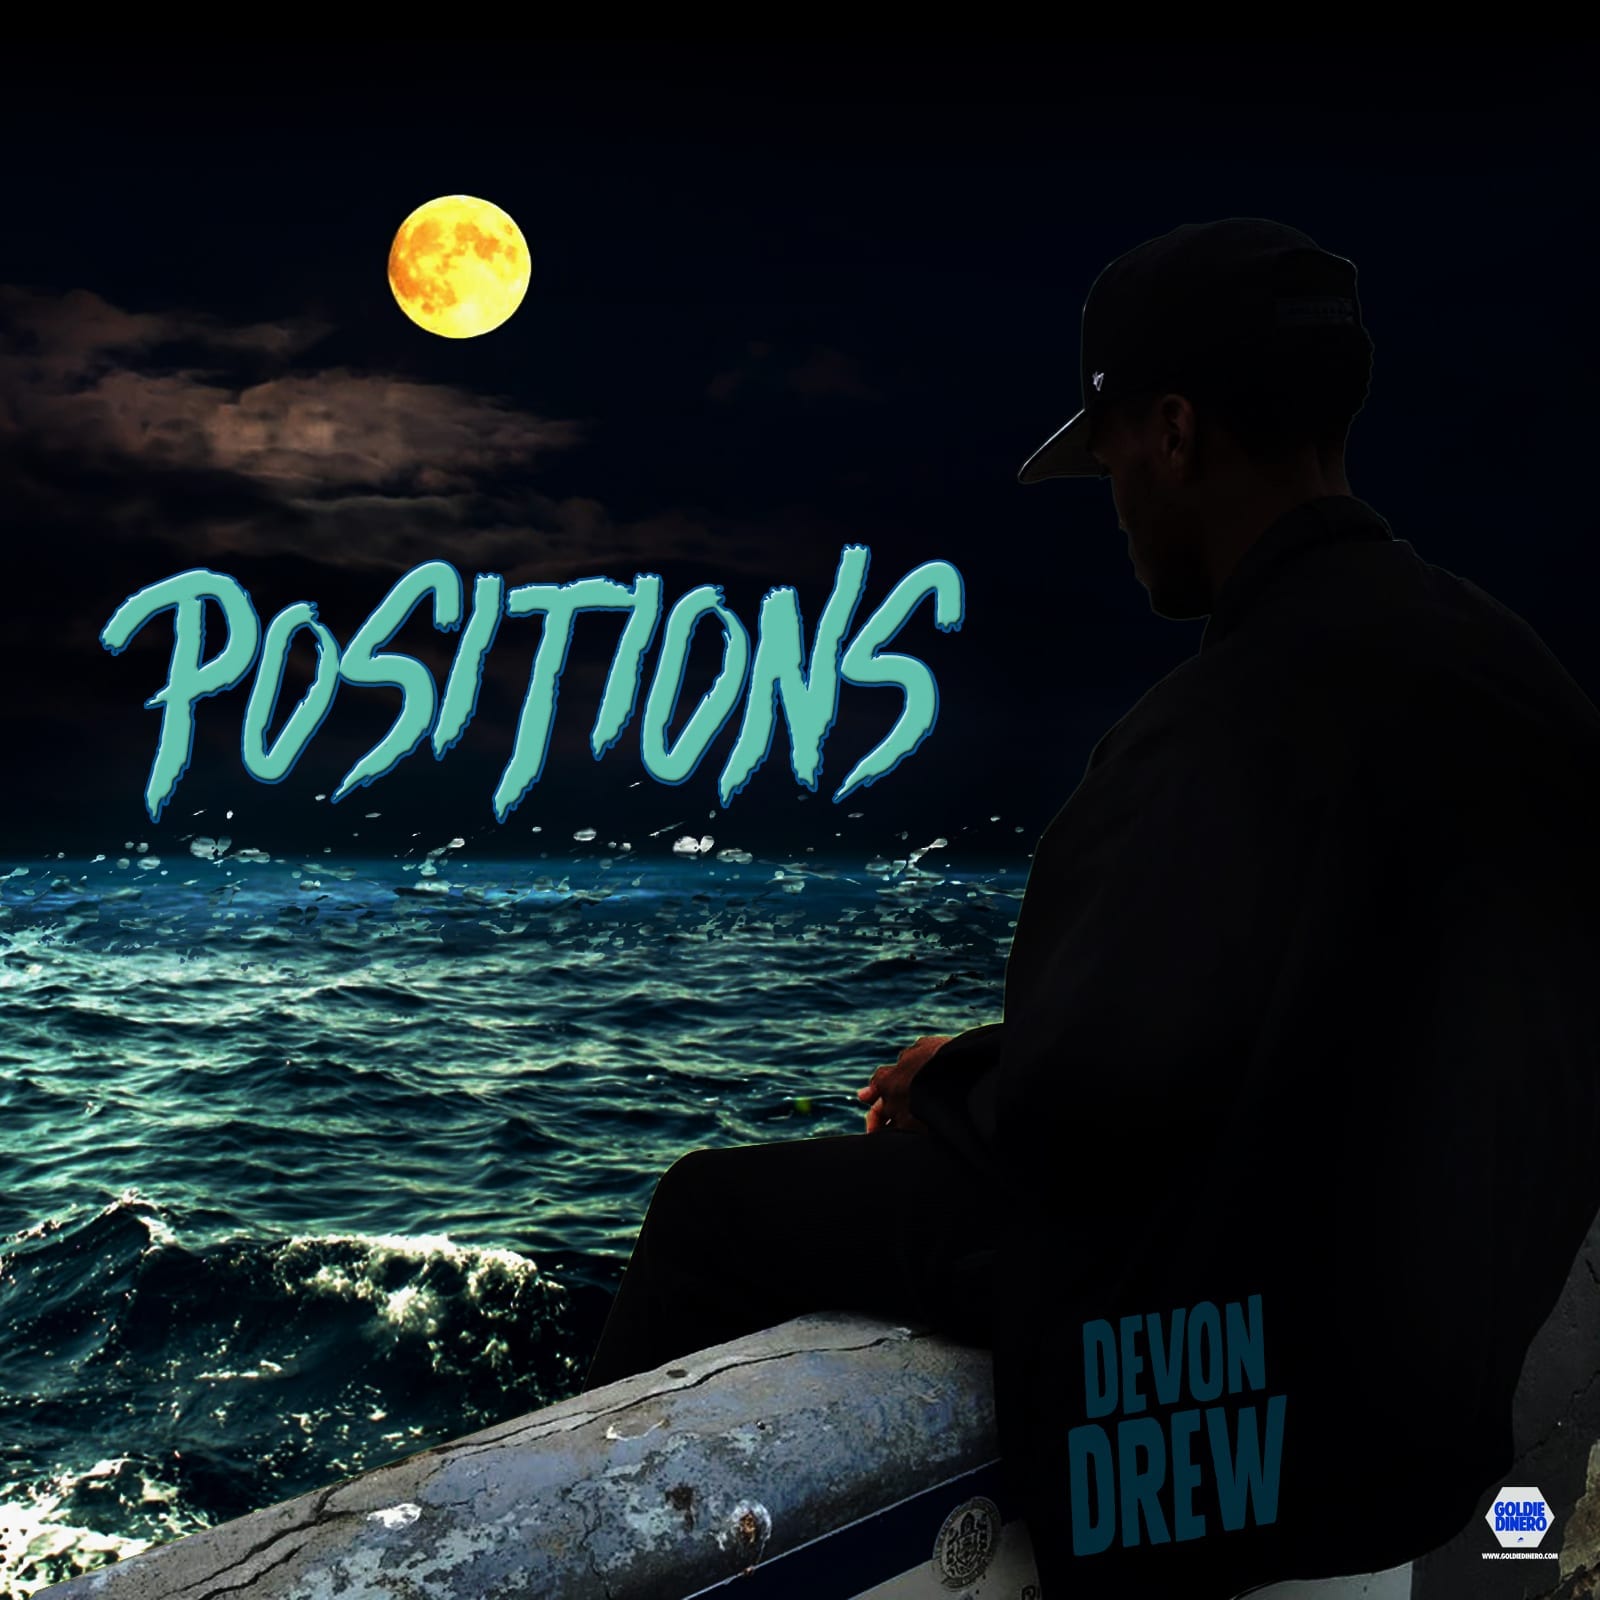 Devon Drew - "Positions"